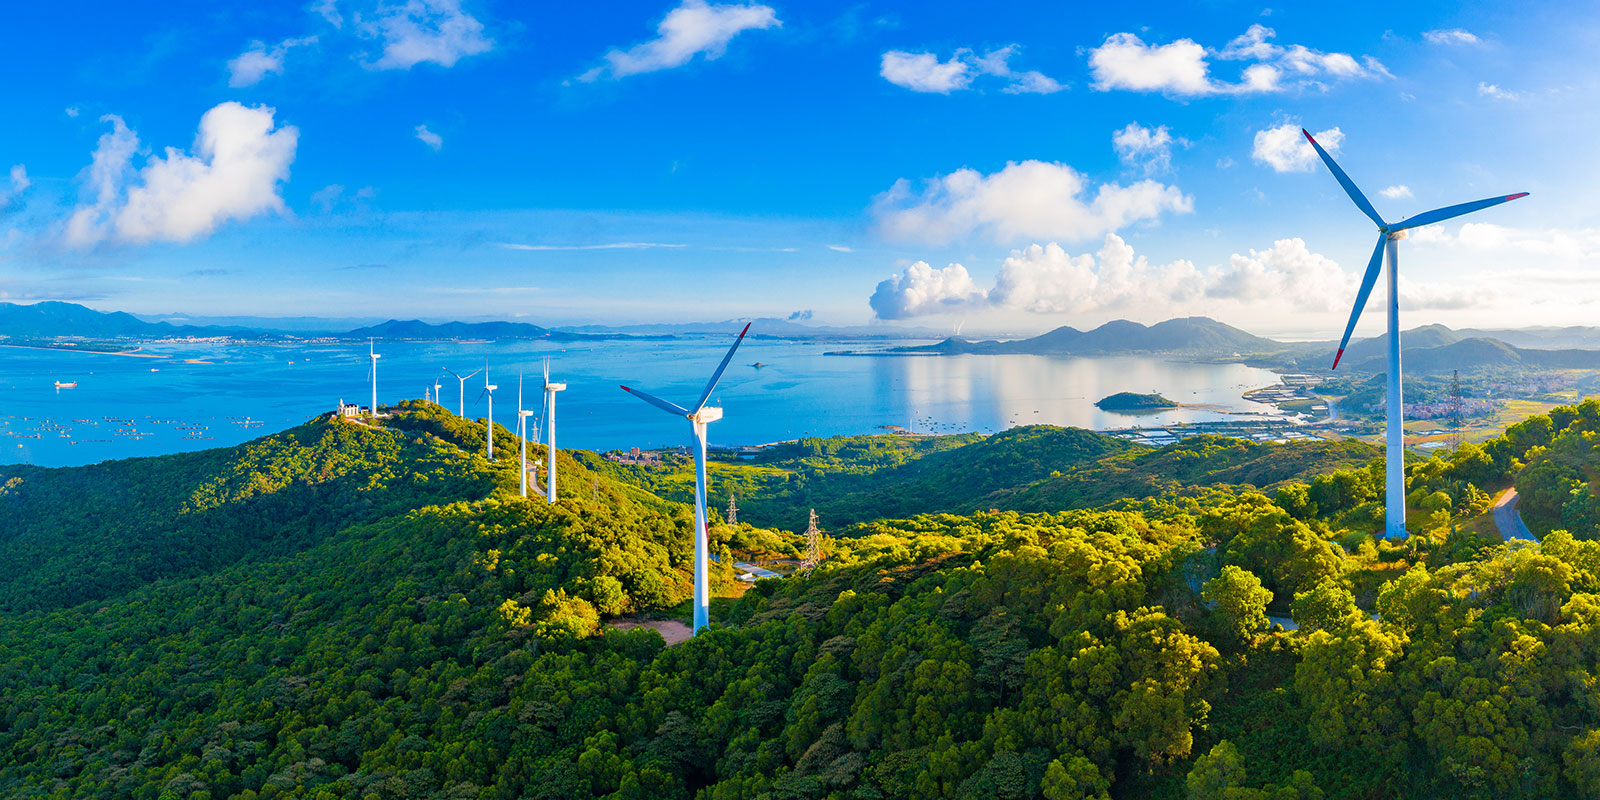 Grande mulino a vento nell'isola di Hailing, città di Yangjiang, provincia di Guangdong, Cina